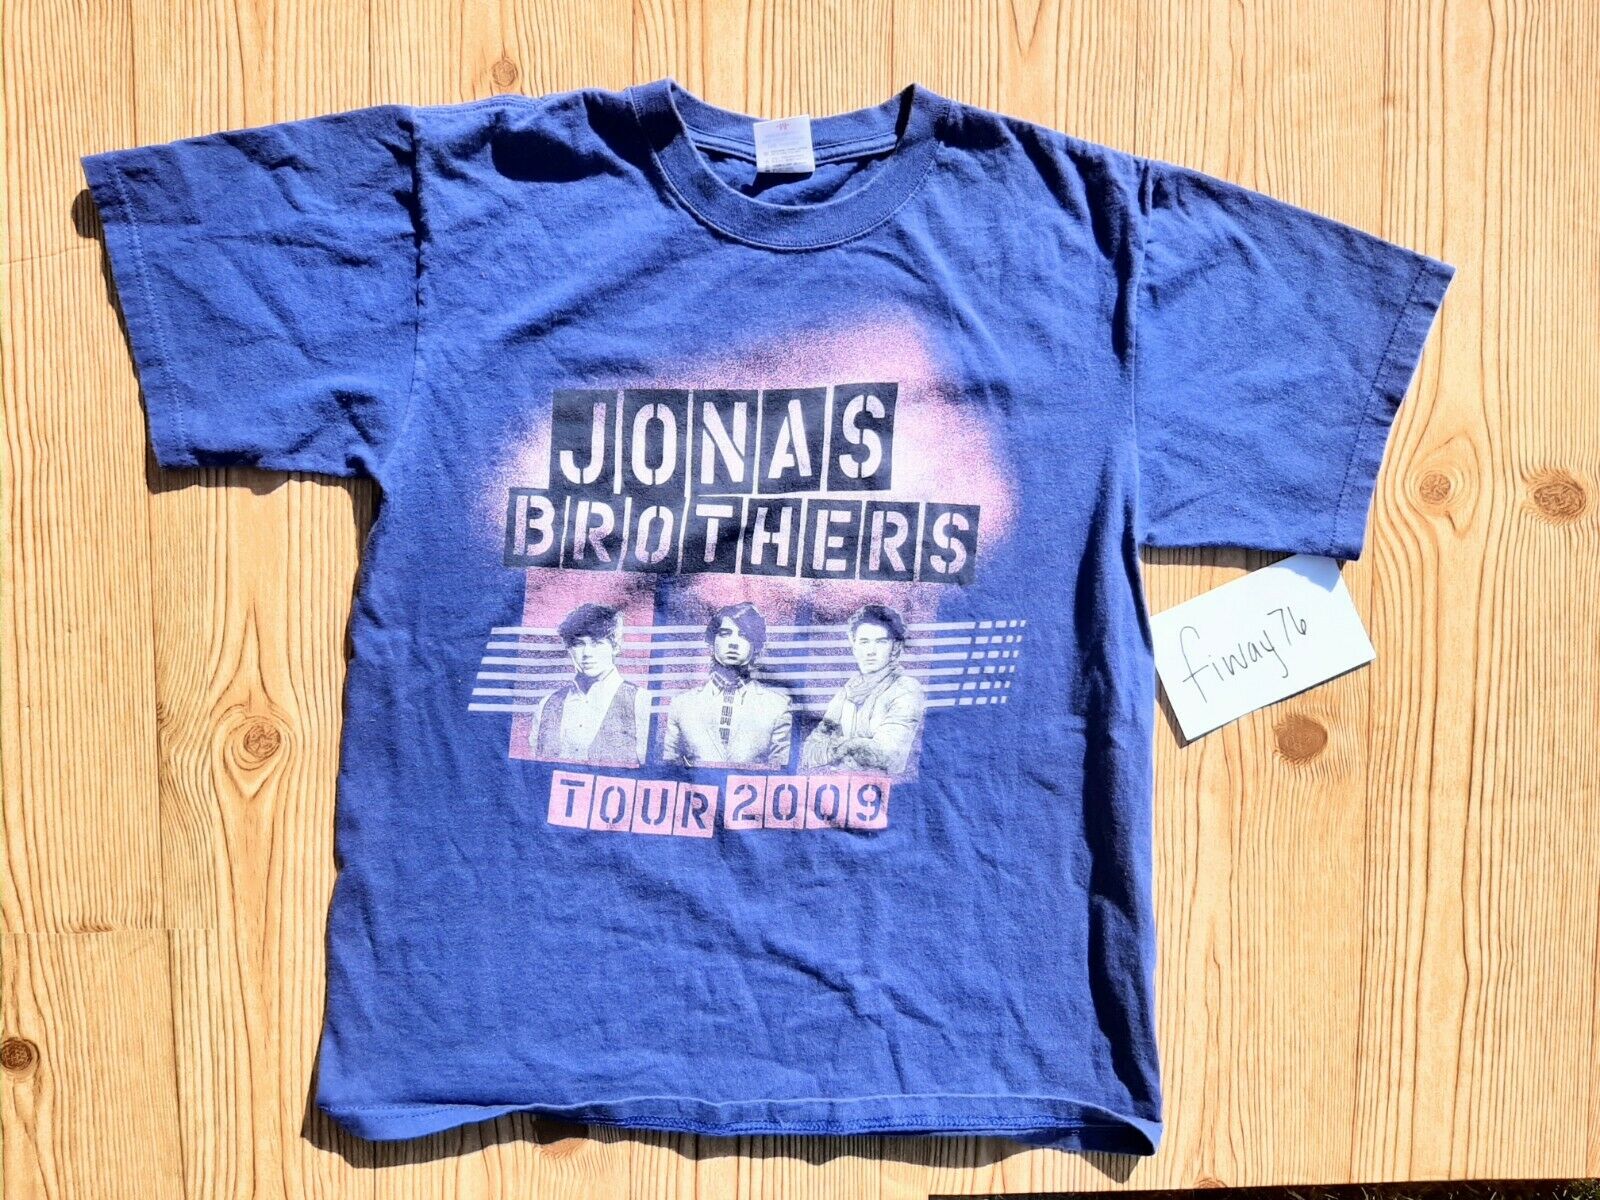 Jonas Brothers 2009 Tour Paradise Island Atlantis Exclusive Concert T-shirt Sz M